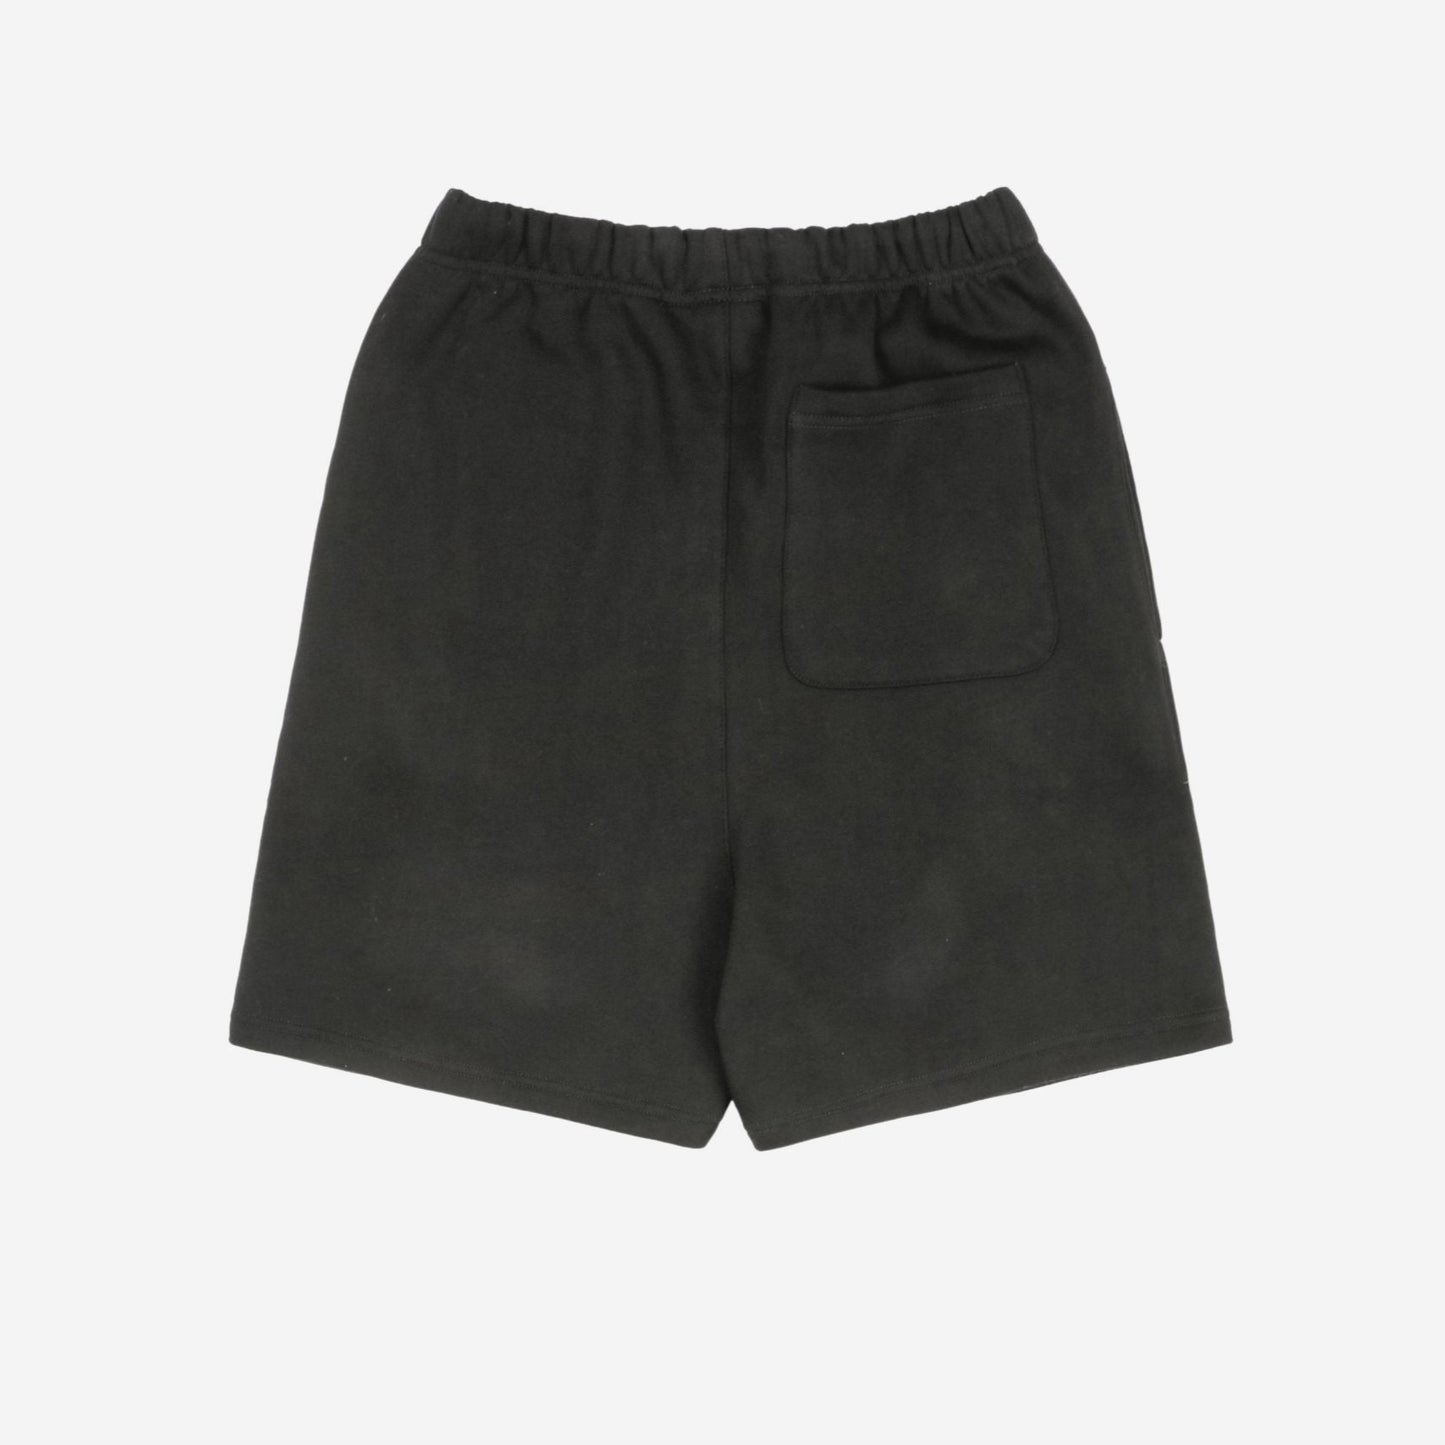 FOG Black E55ential5 Shorts